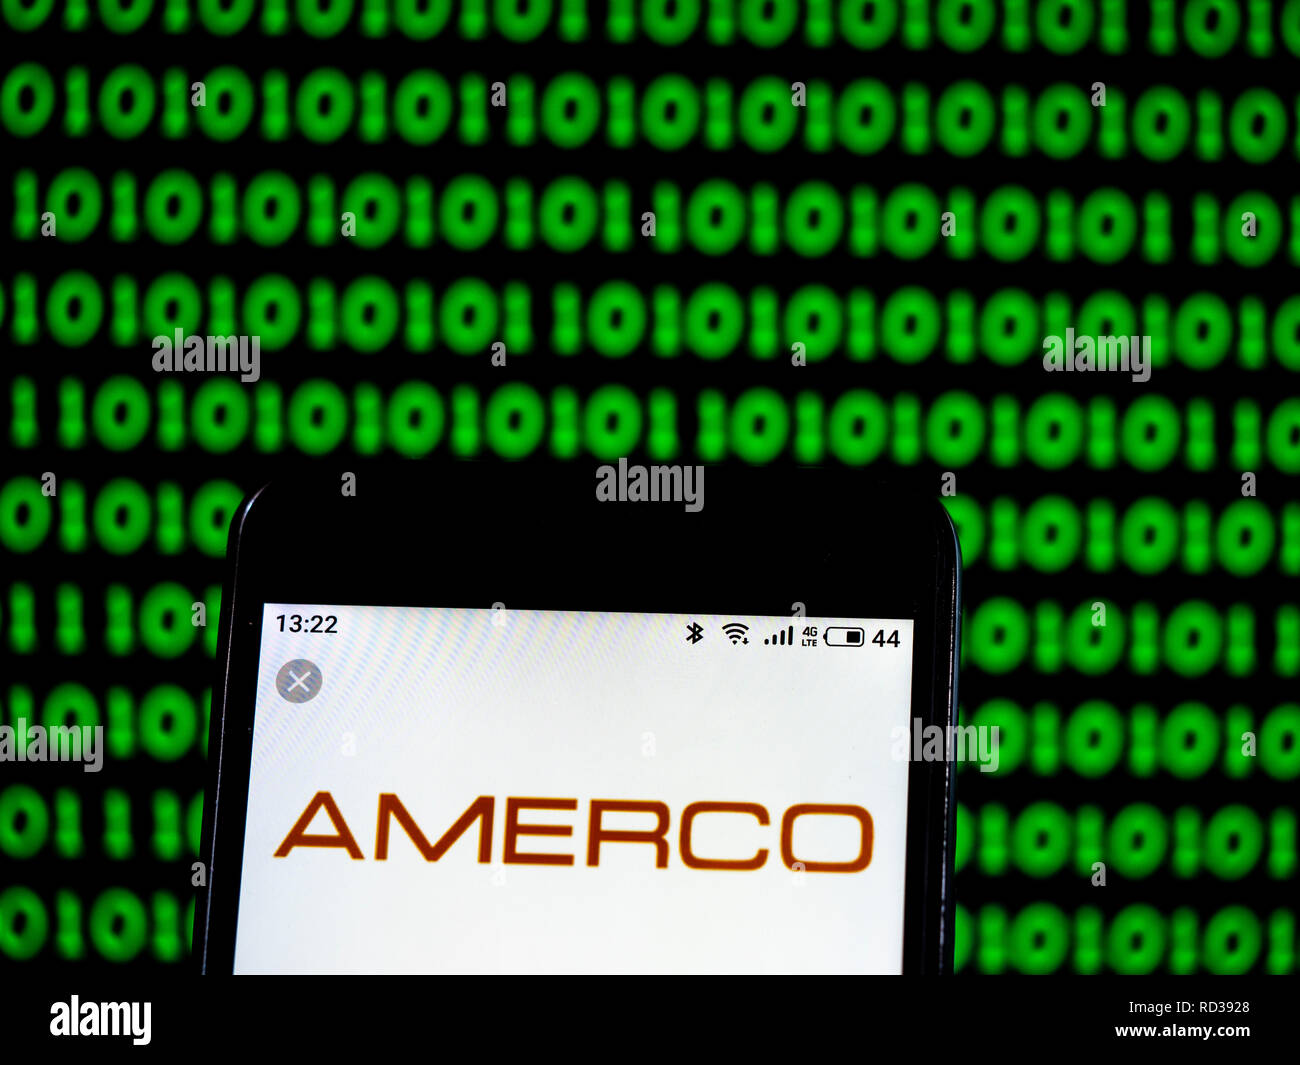 AMERCO Insurance company logo seen displayed on smart phone Stock Photo